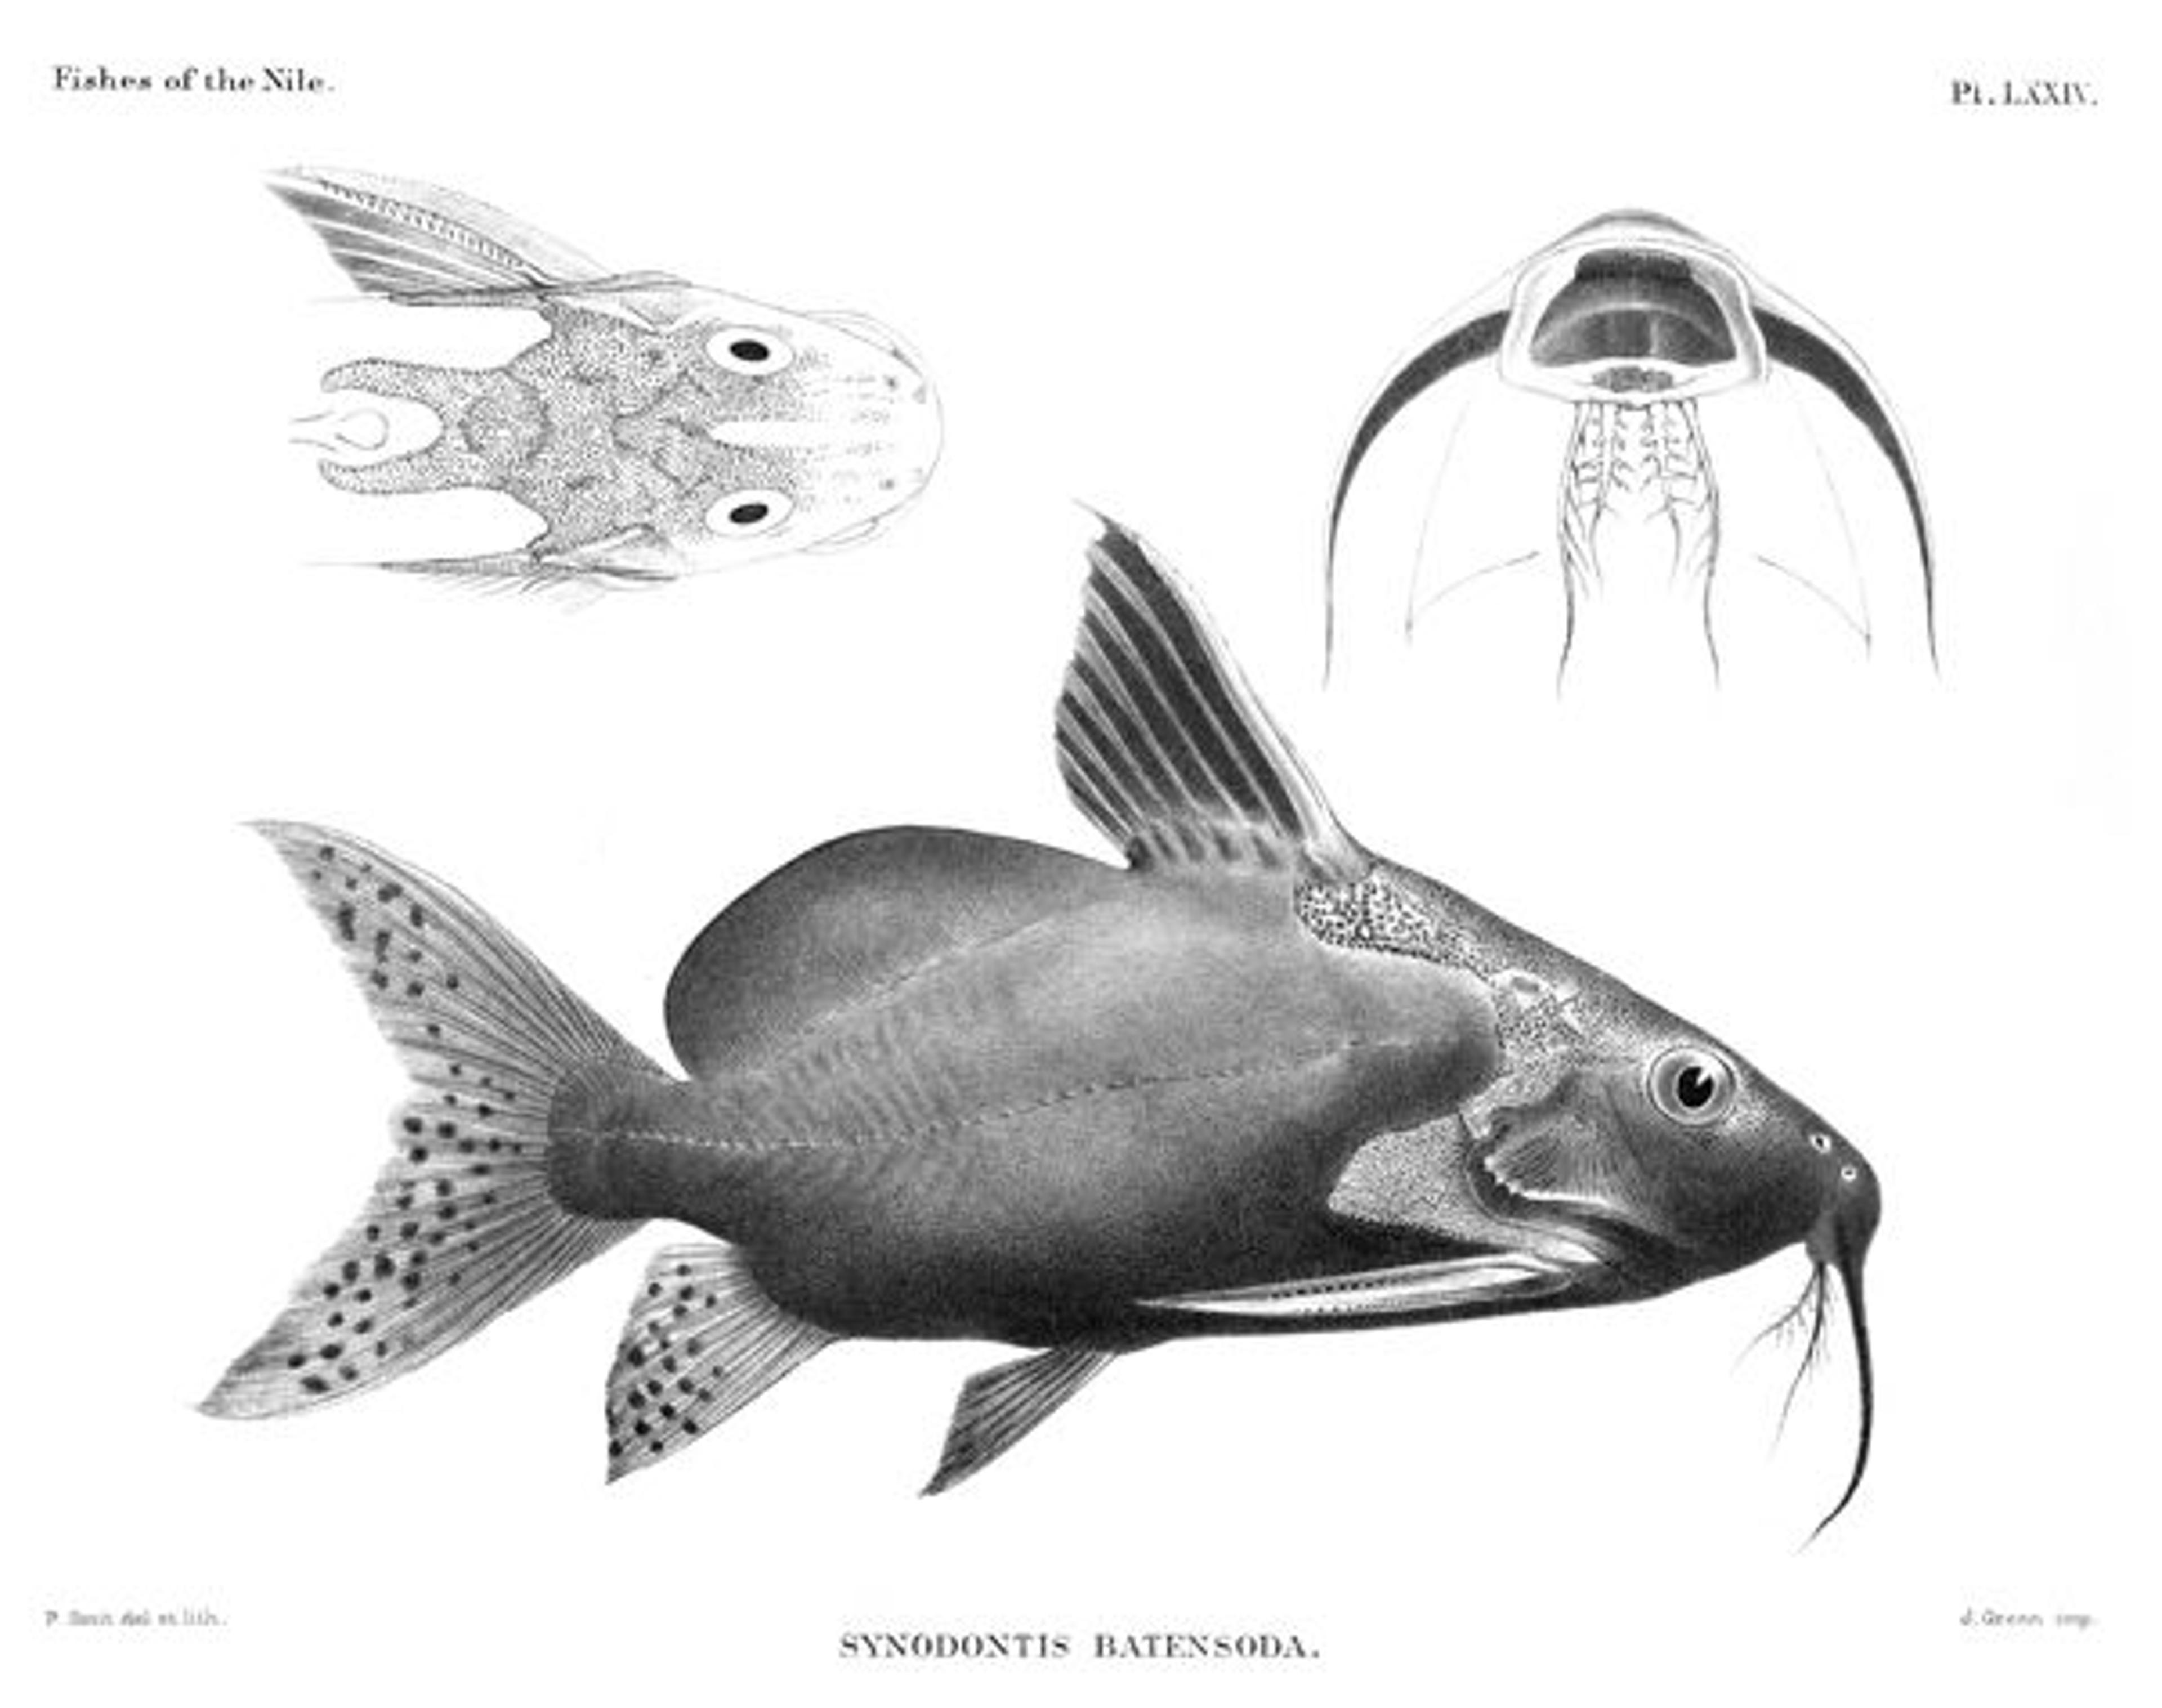 Synodontis batensoda (the "upside-down catfish")